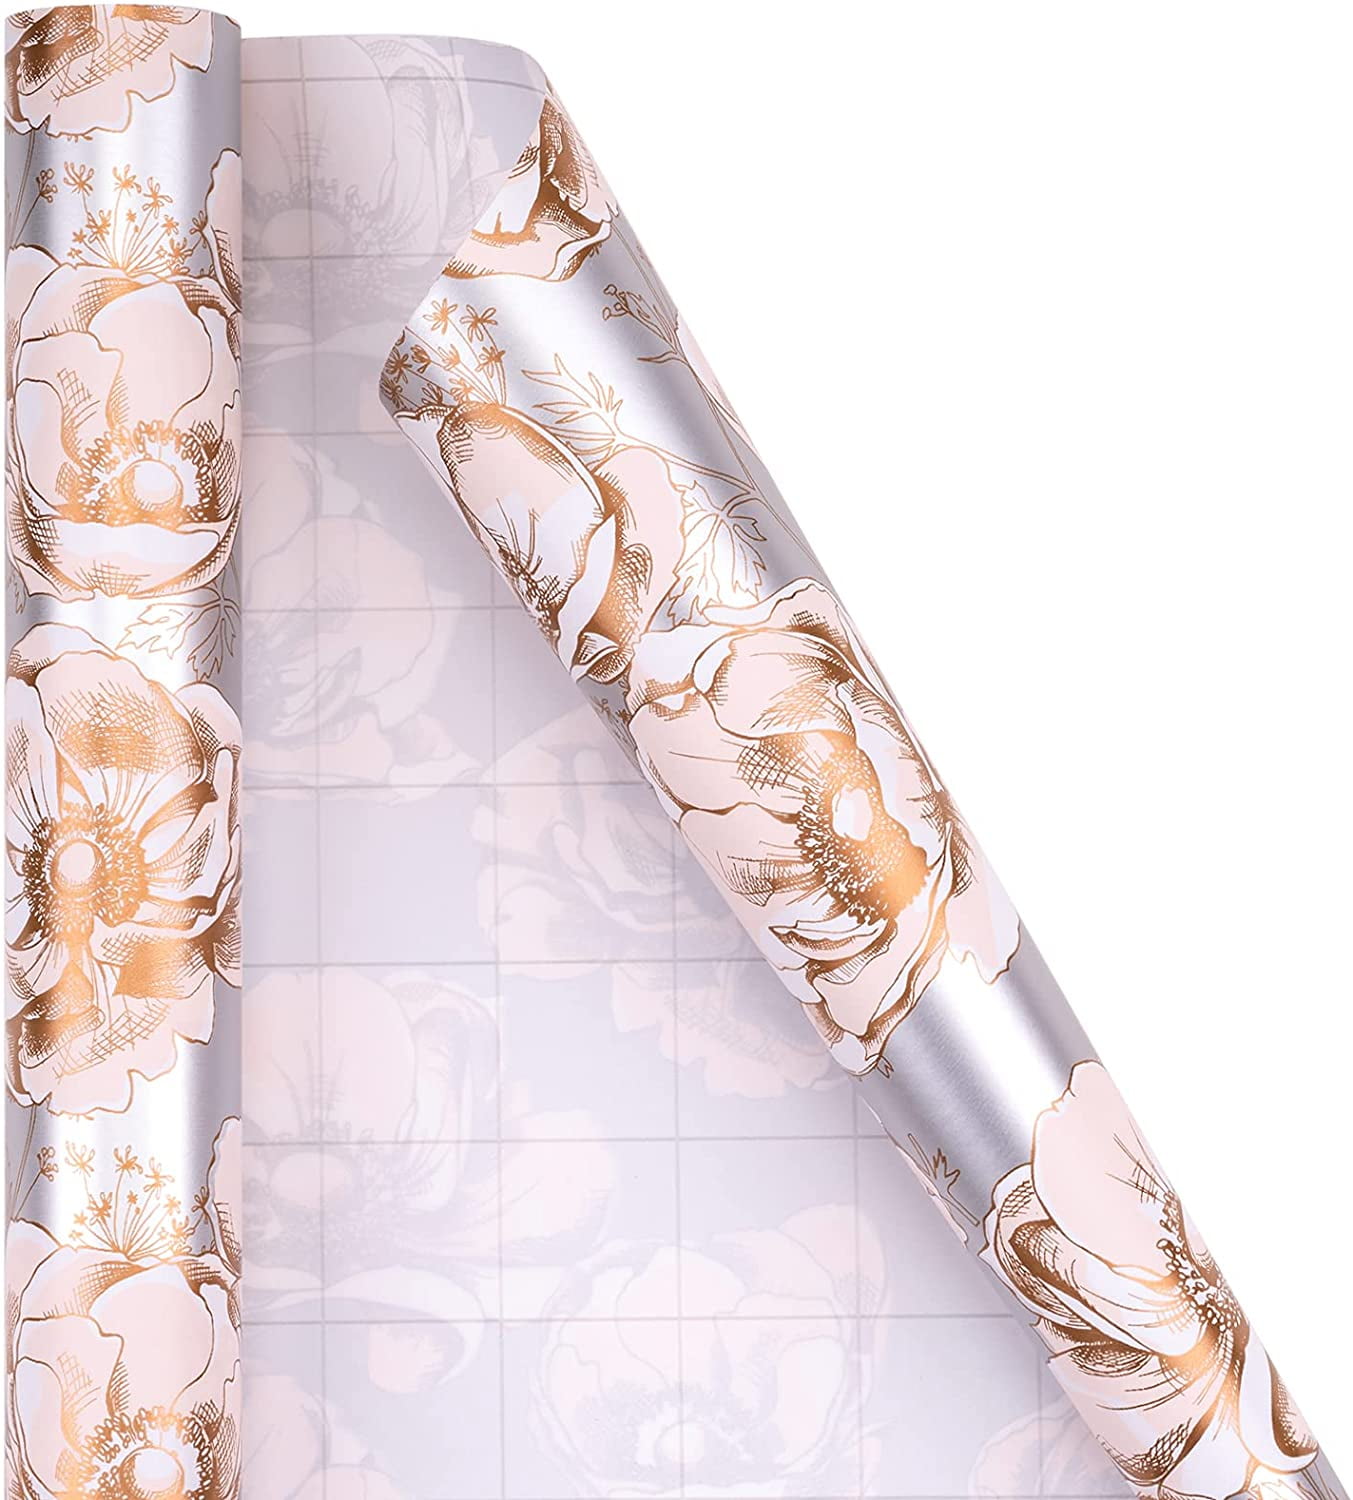 MAYPLUSS Wrapping Paper Roll - Mini Roll - 17 inch x 120 inch per Roll - White & Gold Foil Design (42.3 sq.ft.ttl)